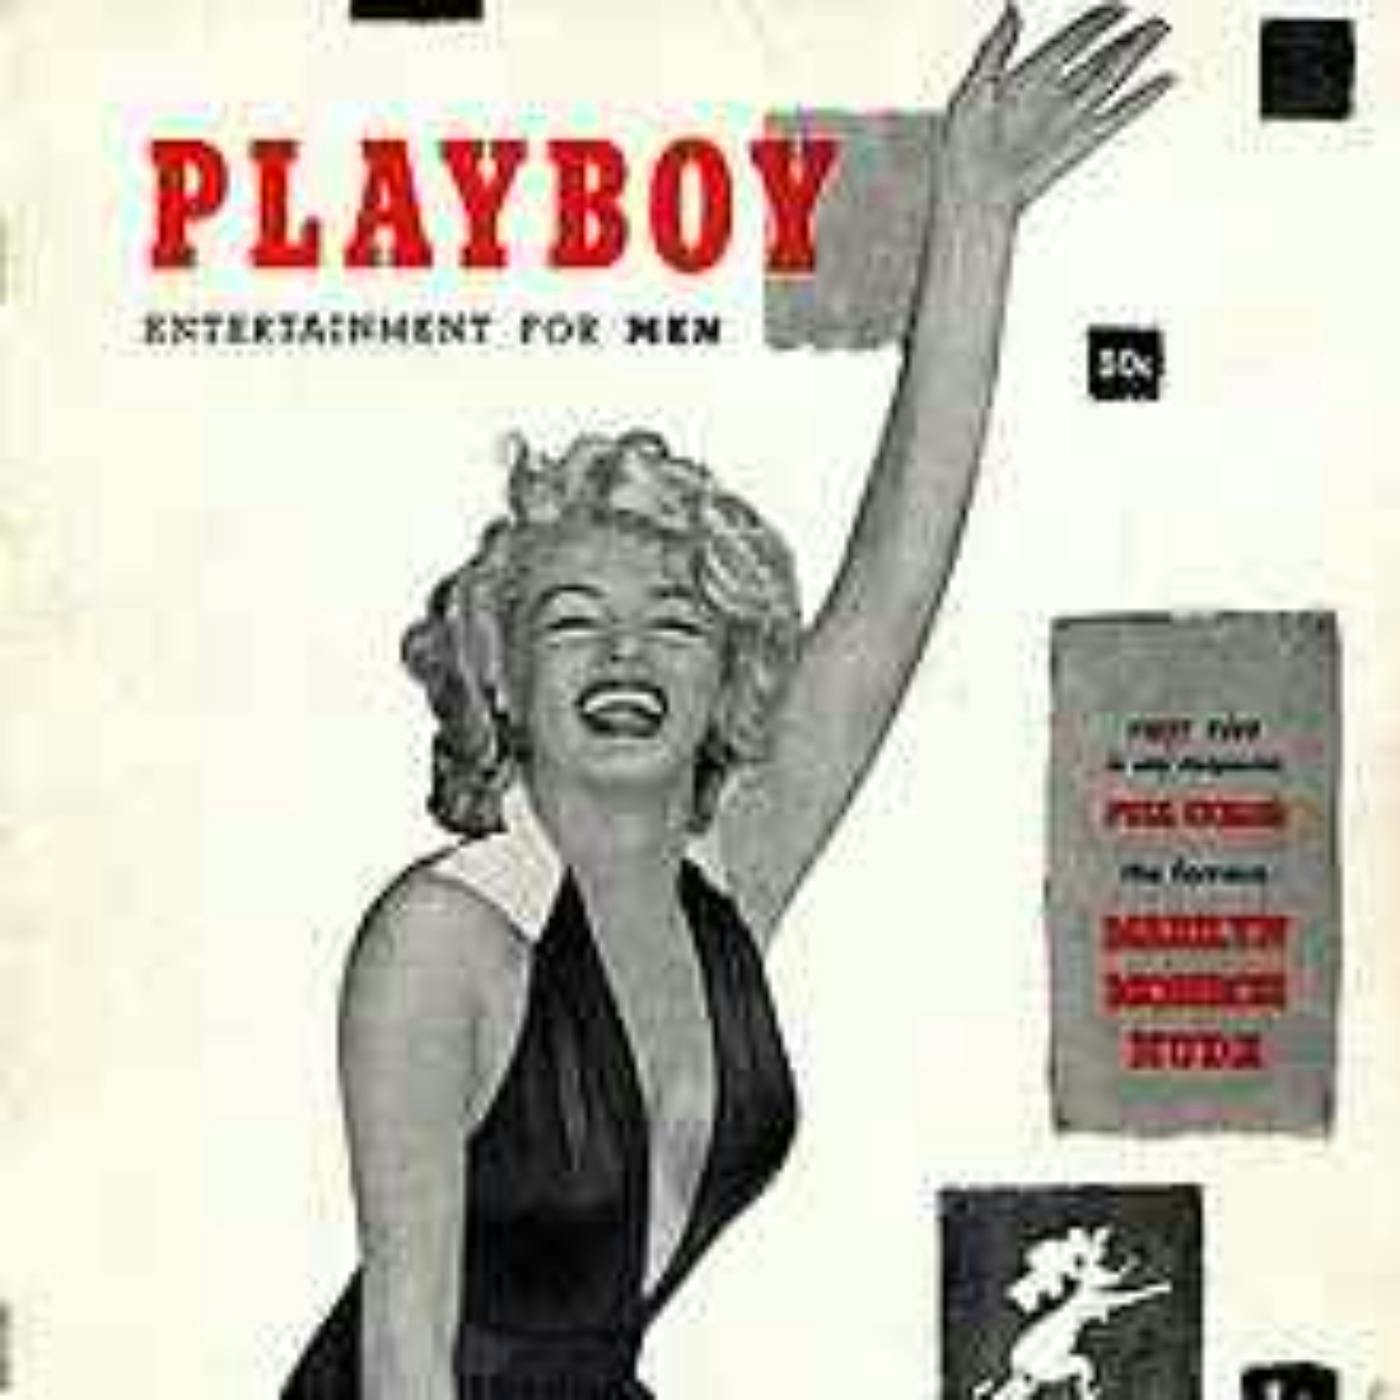 Playboy's Identity Crisis